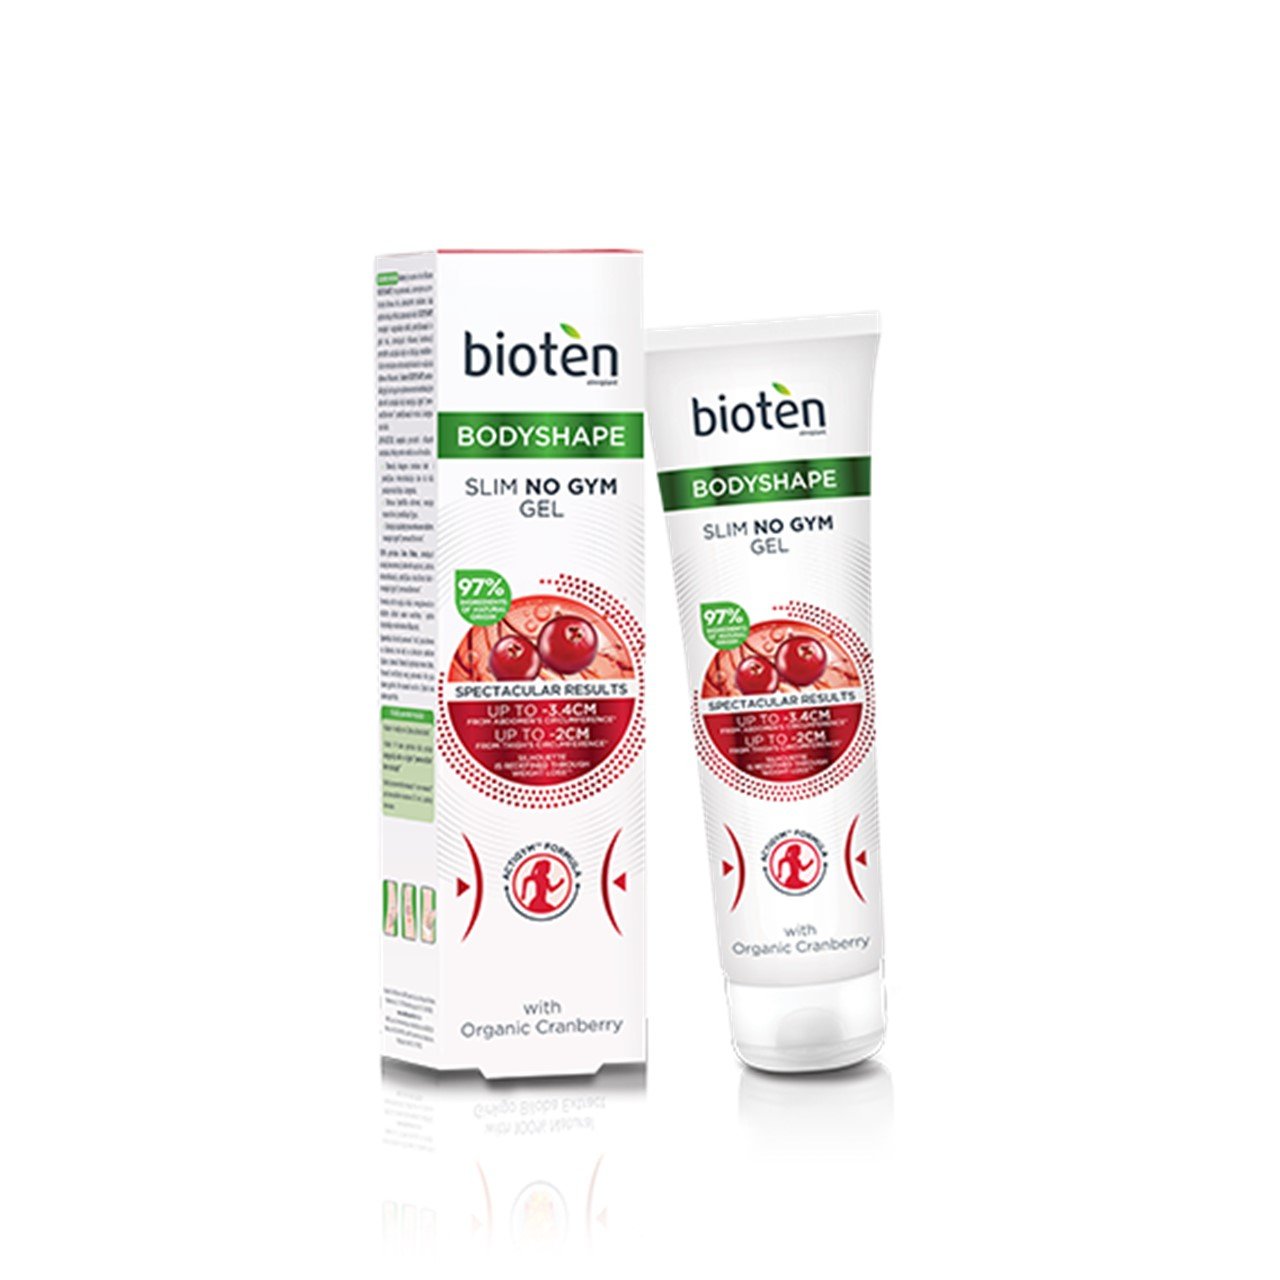 bioten Bodyshape Slim-No-Gym Anticellulite Gel 150ml (5.07fl oz)